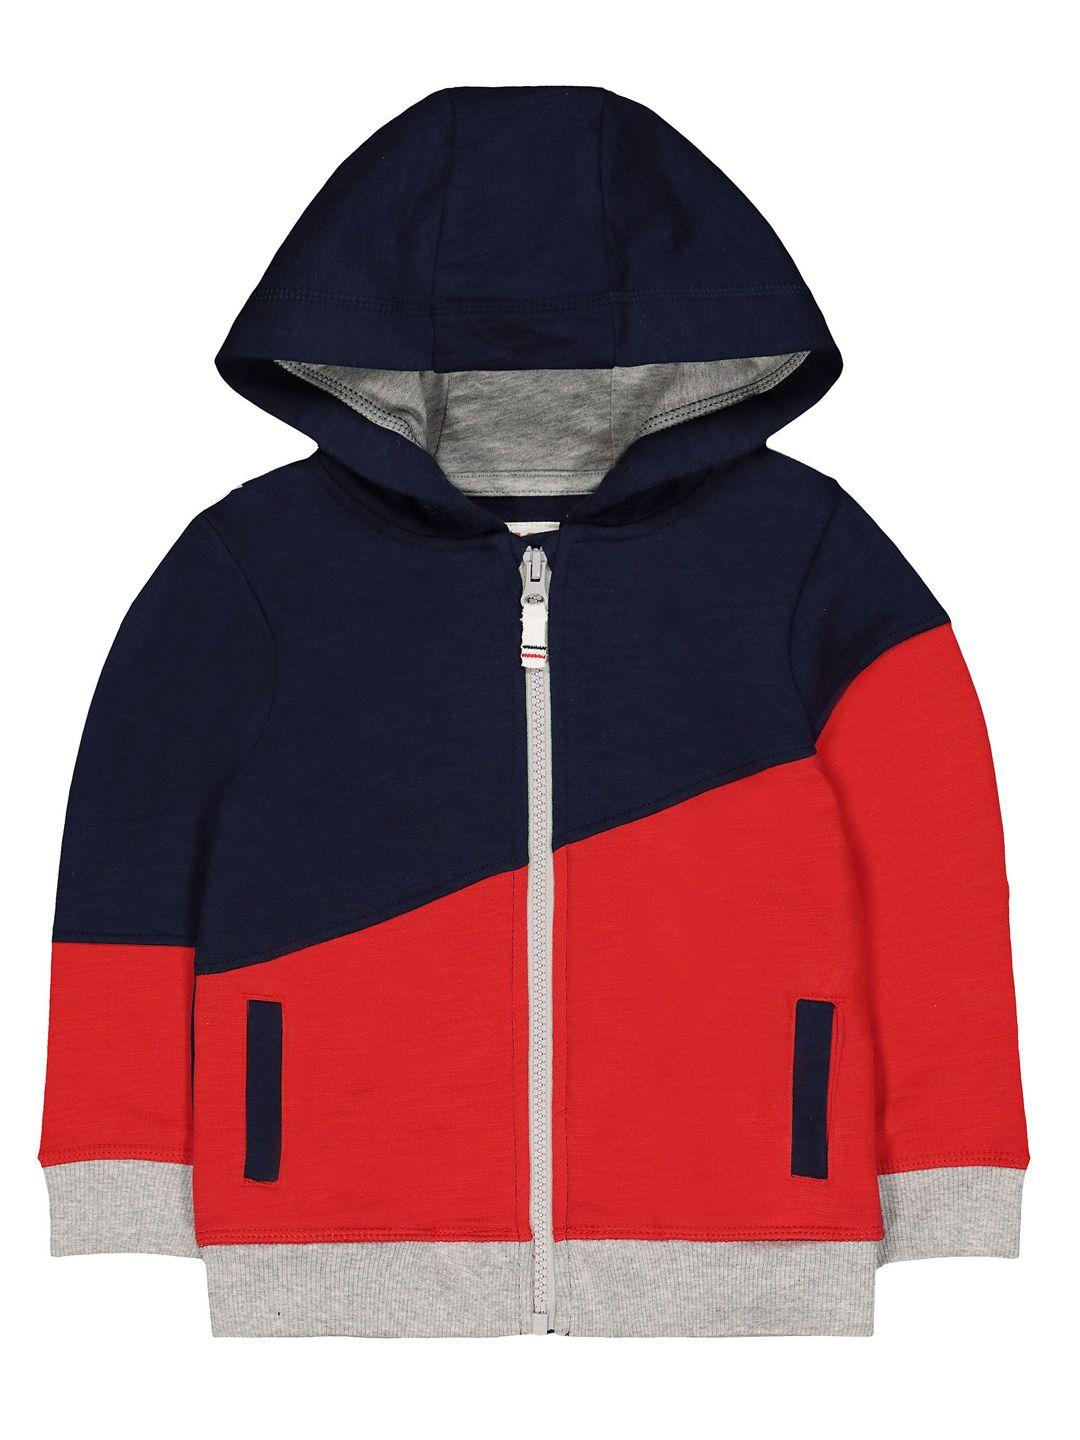 mothercare boys navy blue & red colourblocked hooded sweatshirt